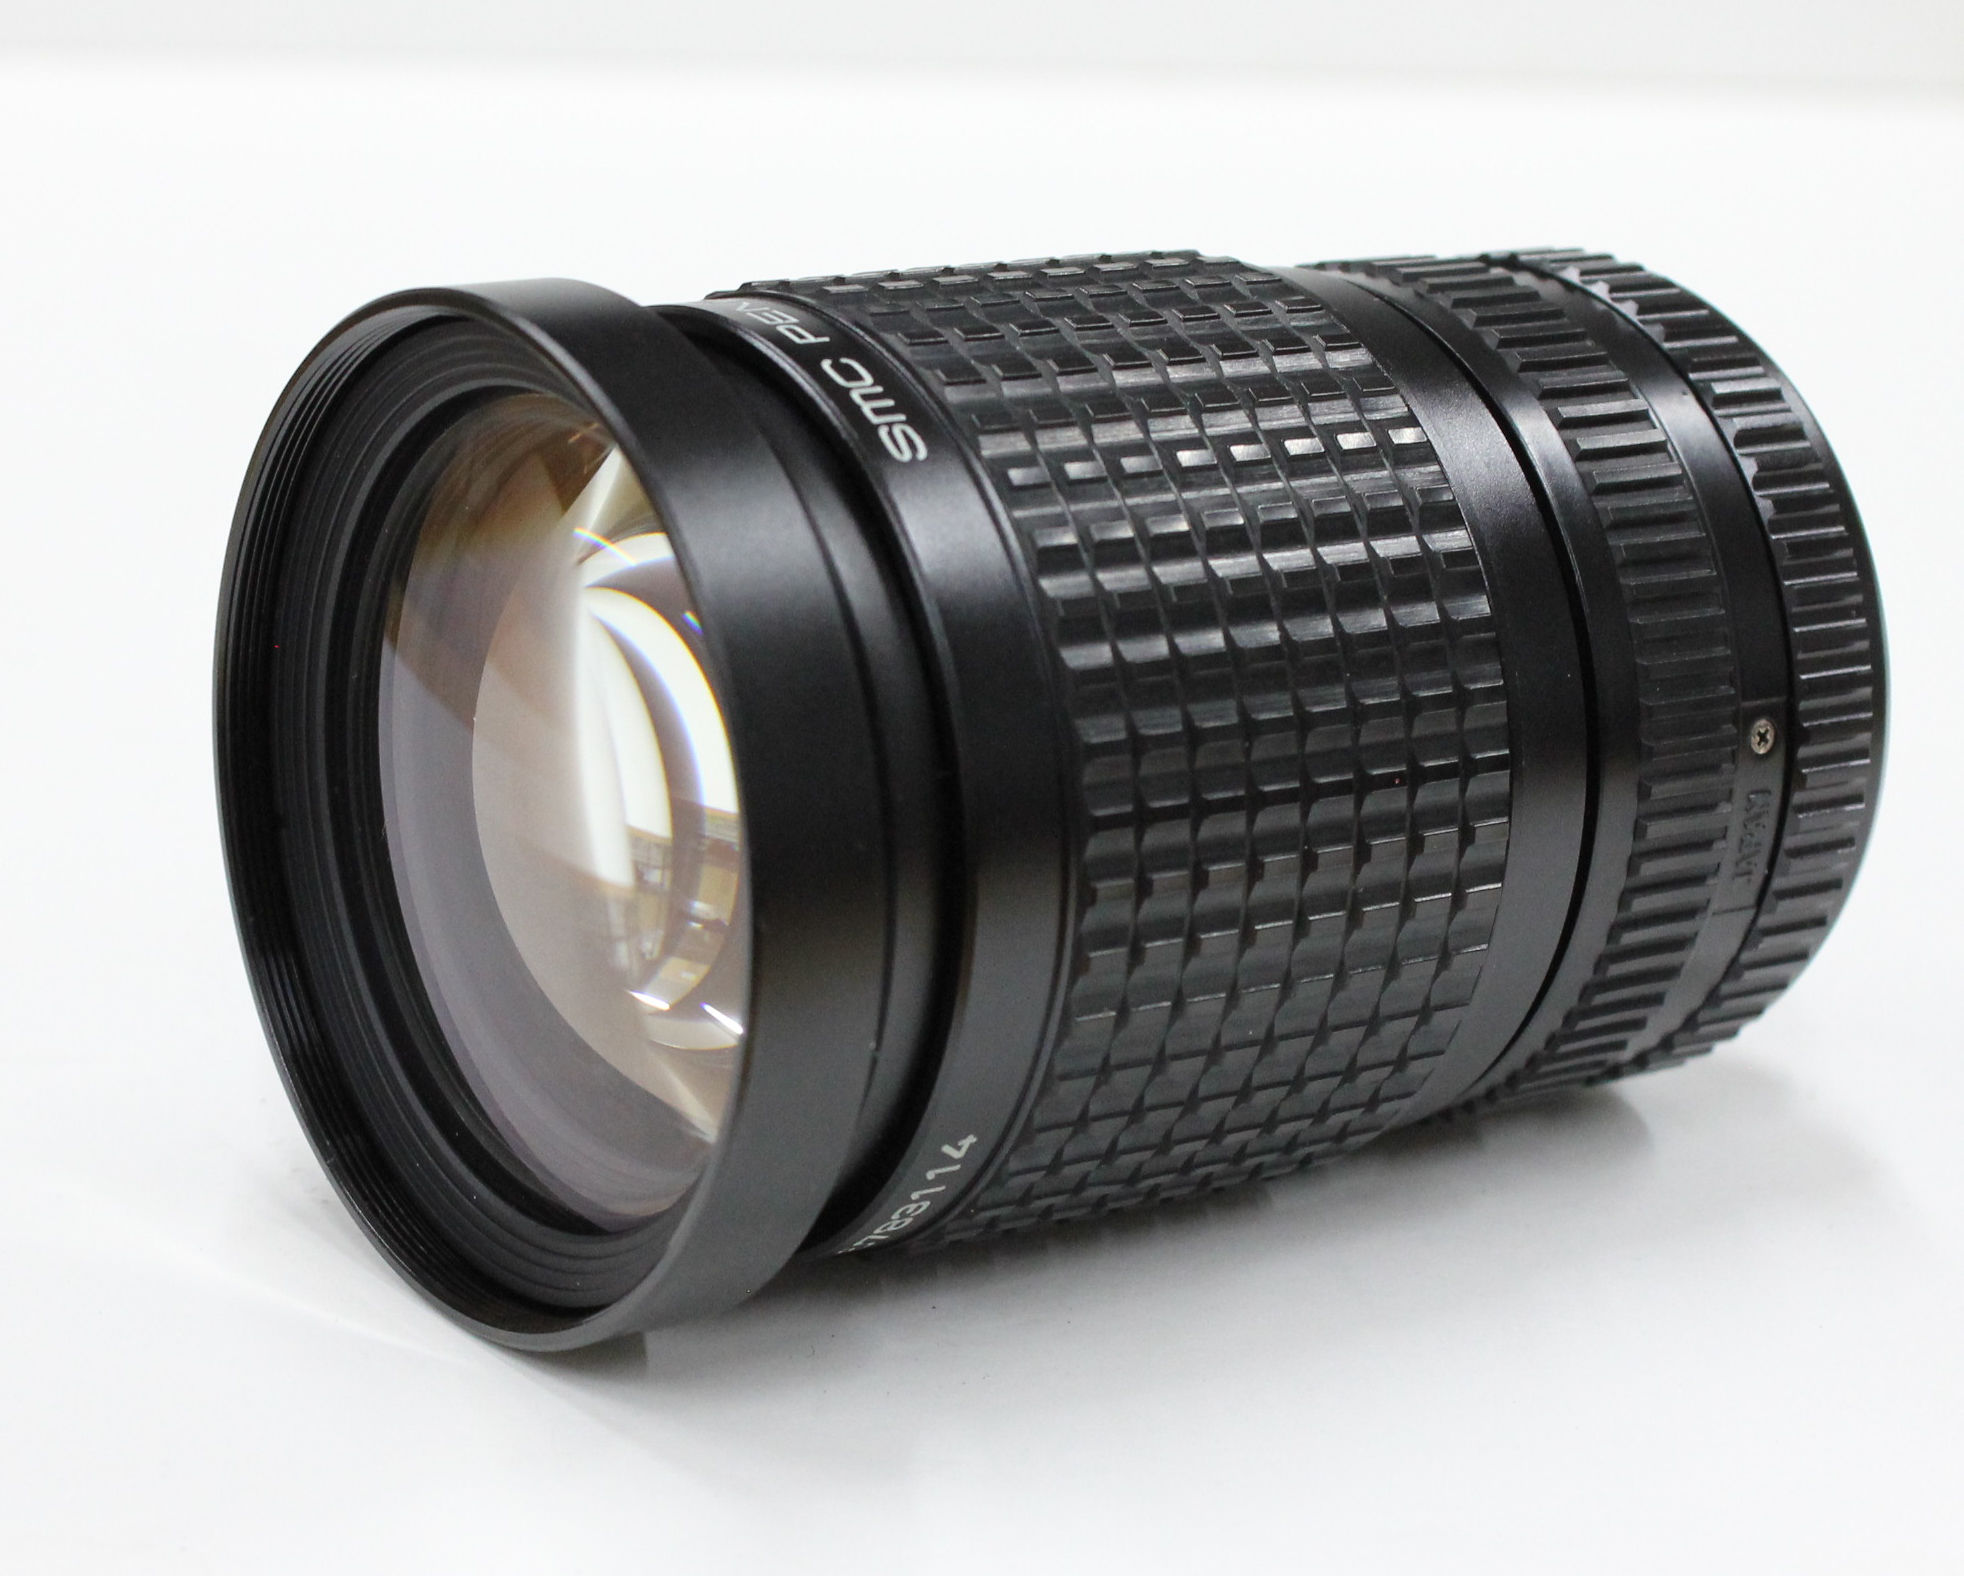 Japan Used Camera Shop | [Mint] Pentax SMC PENTAX-A ZOOM 35-105mm F/3.5 K Mount Lens from Japan